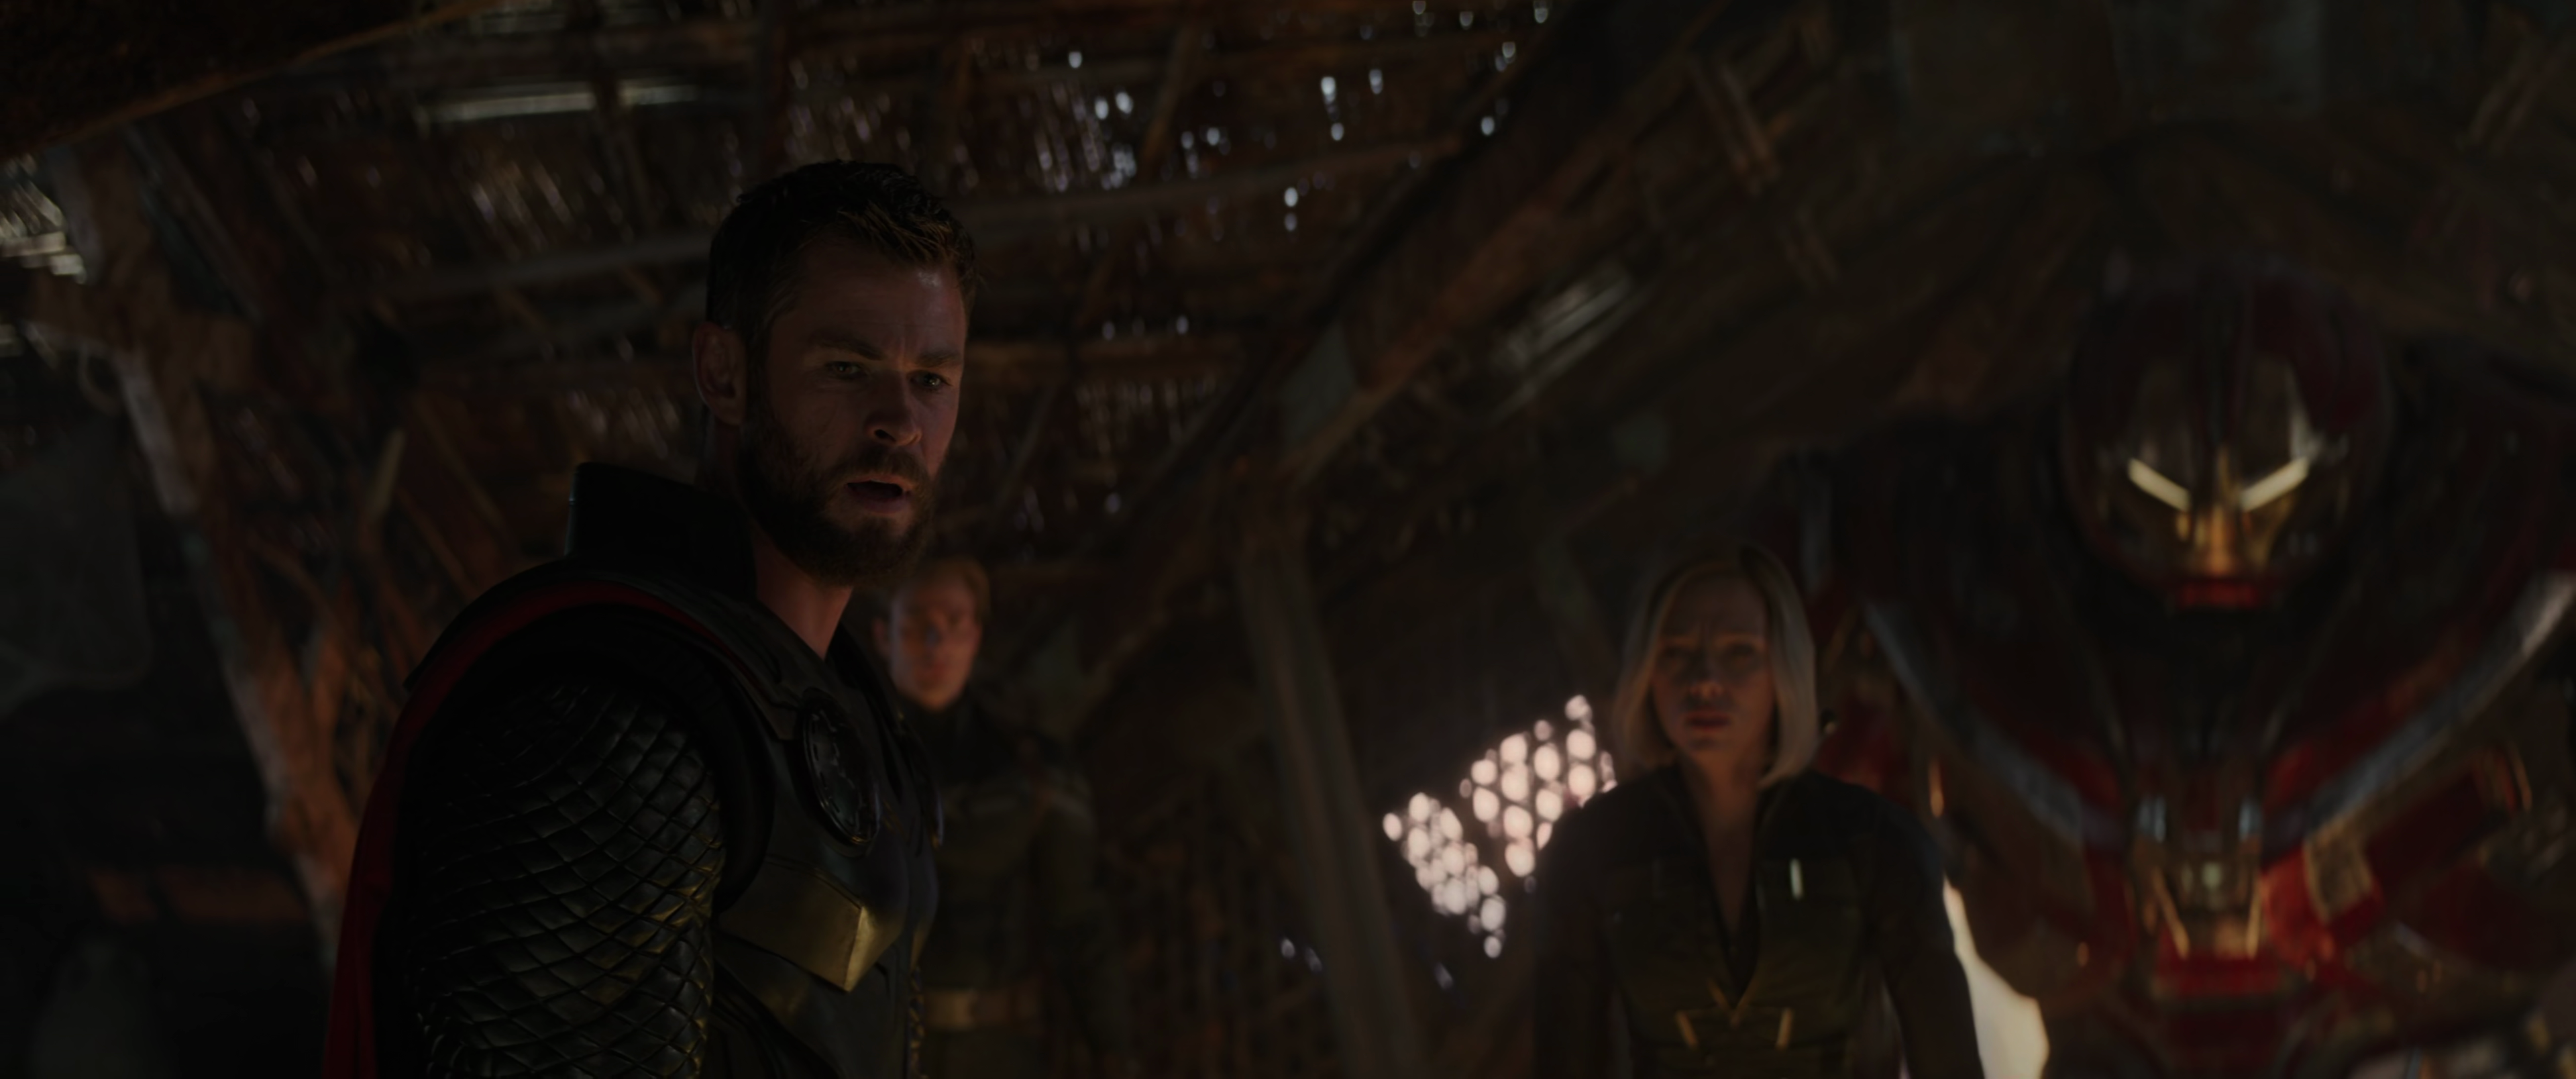 Thor (Chris Hemsworth) finally goes for the head as War Machine (Don Cheadle), Black Widow (Scarlett Johansson), and a Hulk-buster clad Bruce Banner (Mark Ruffallo) look on in Avengers: Endgame (2019), Marvel Entertainment via Blu-ray